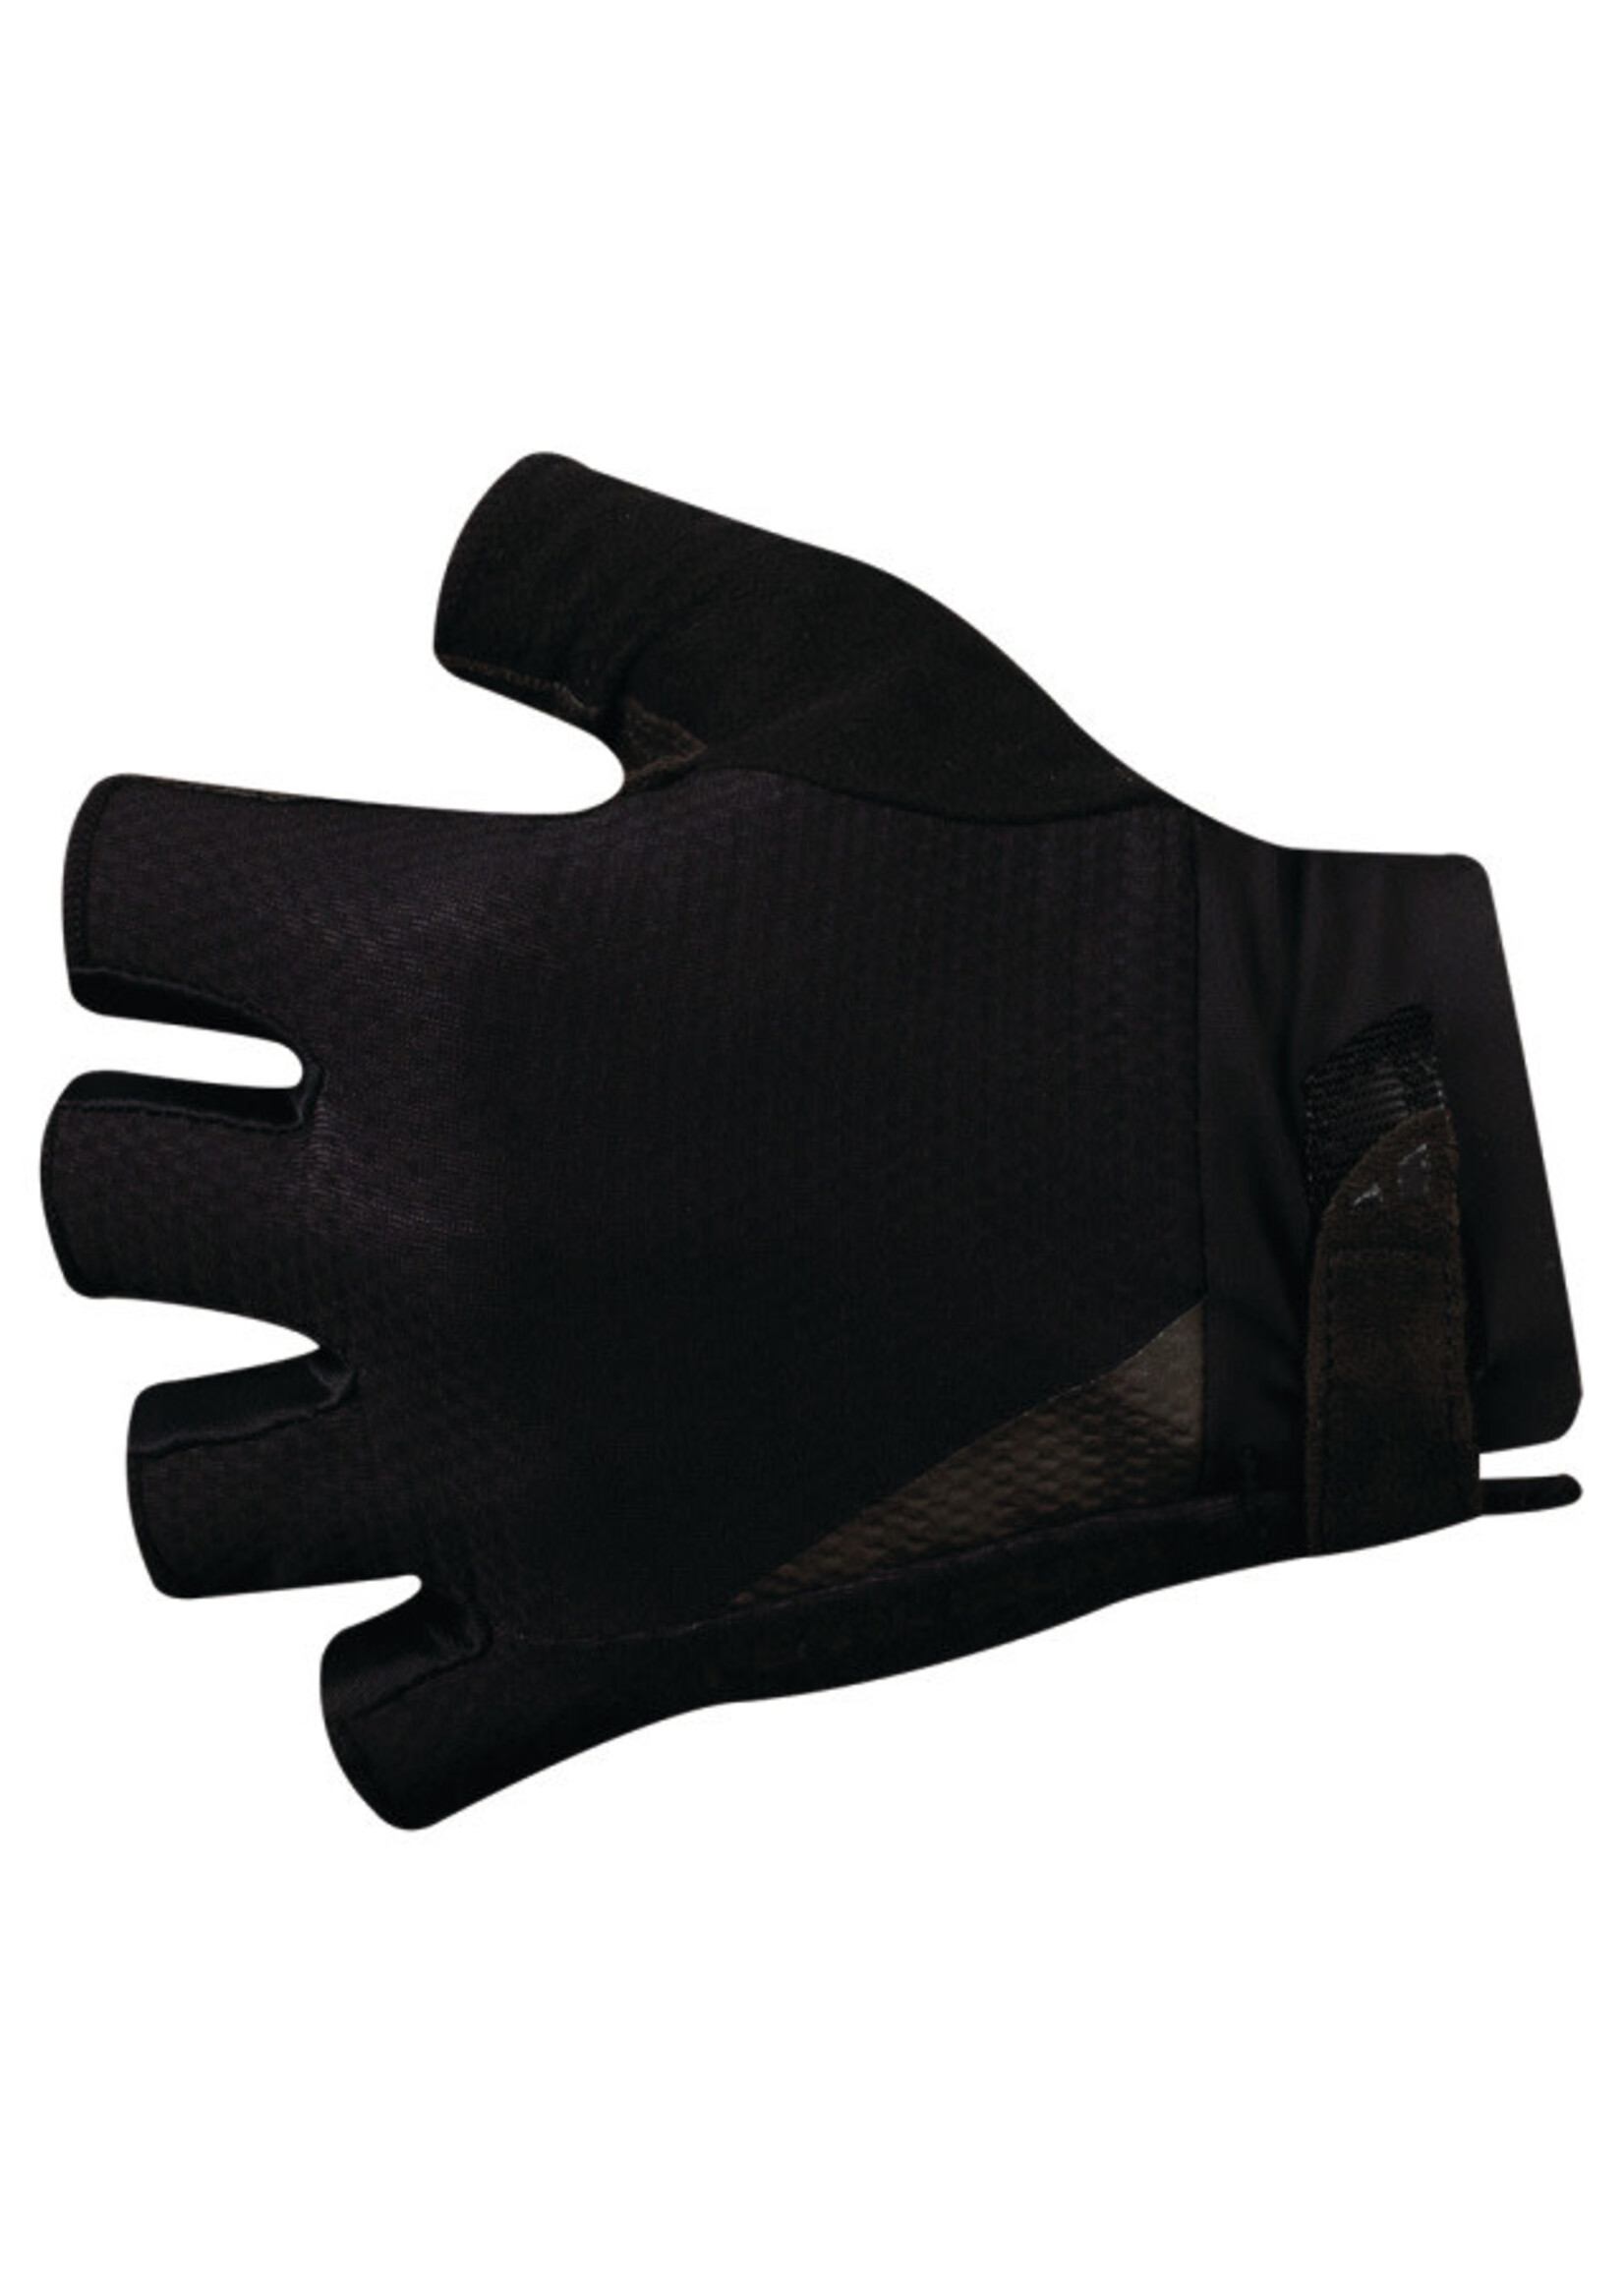 Pearl iZUMi ELITE gel Handschuhe black